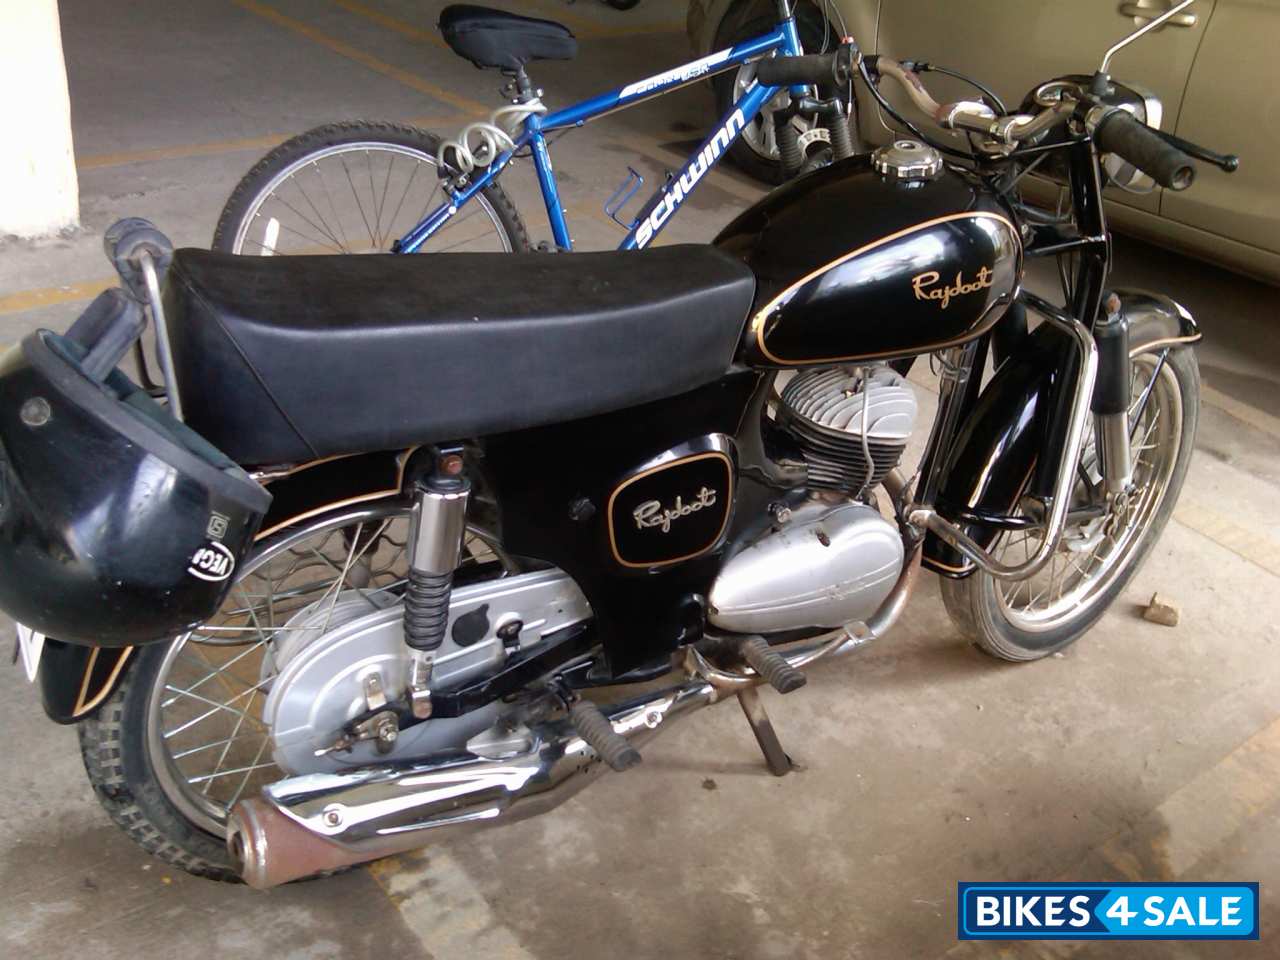 Rajdoot Old Model Bike Image